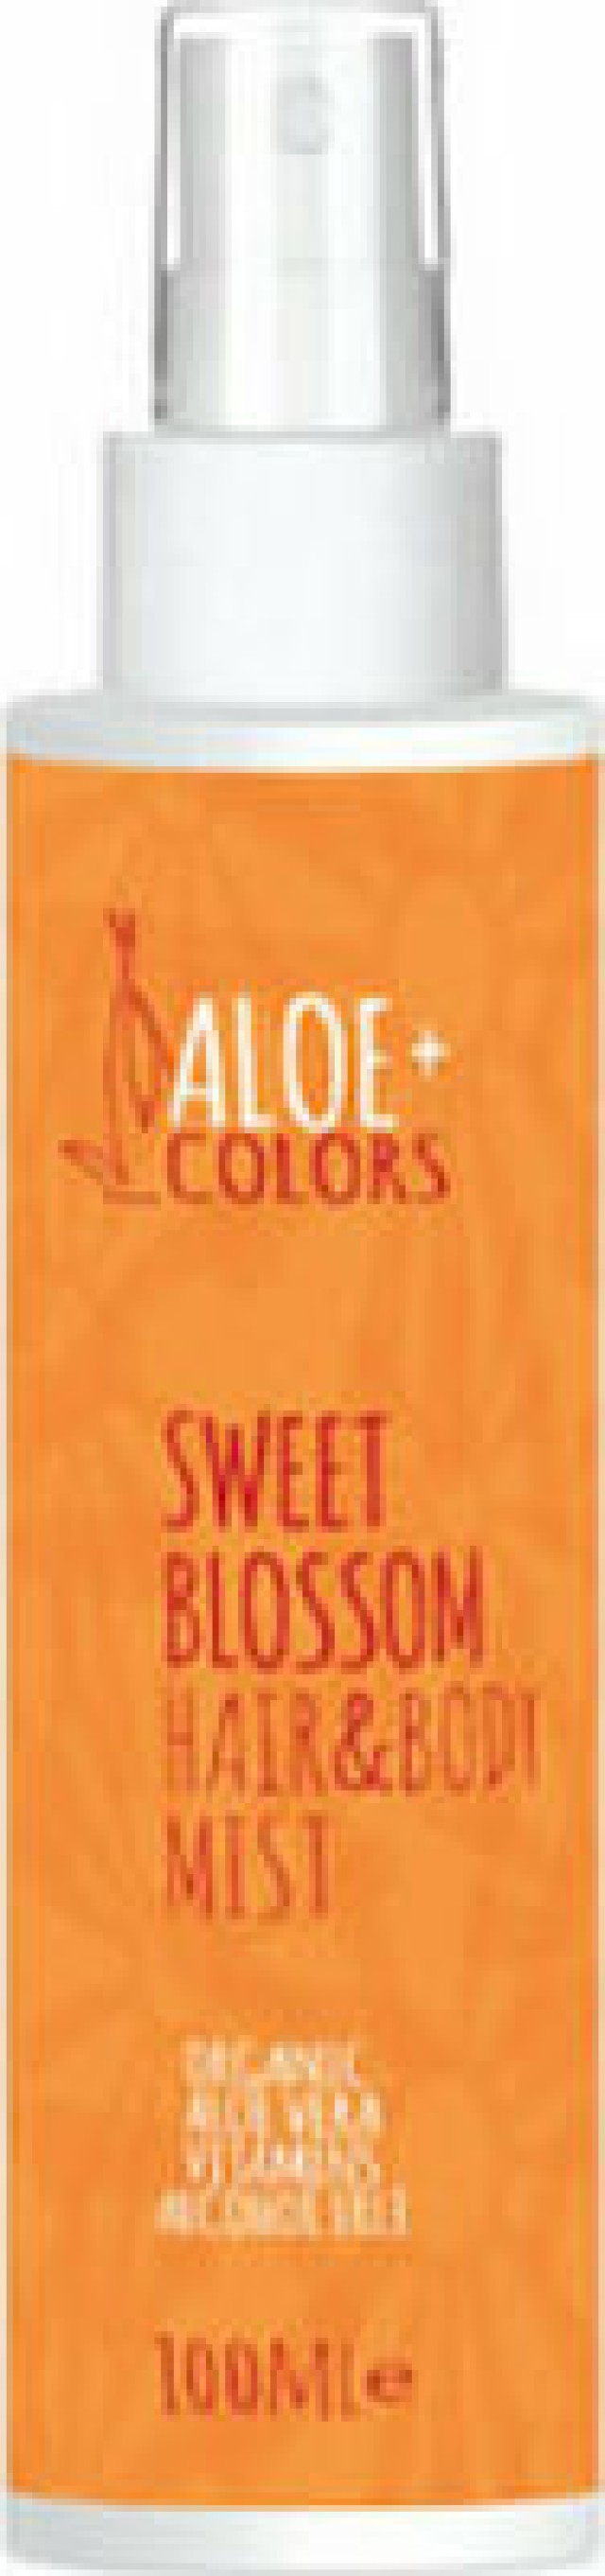 Aloe+ Colors Sweet Blossom Hair & Body Mist Ενυδατικό Σπρέι Μαλλιών & Σώματος, 100ml